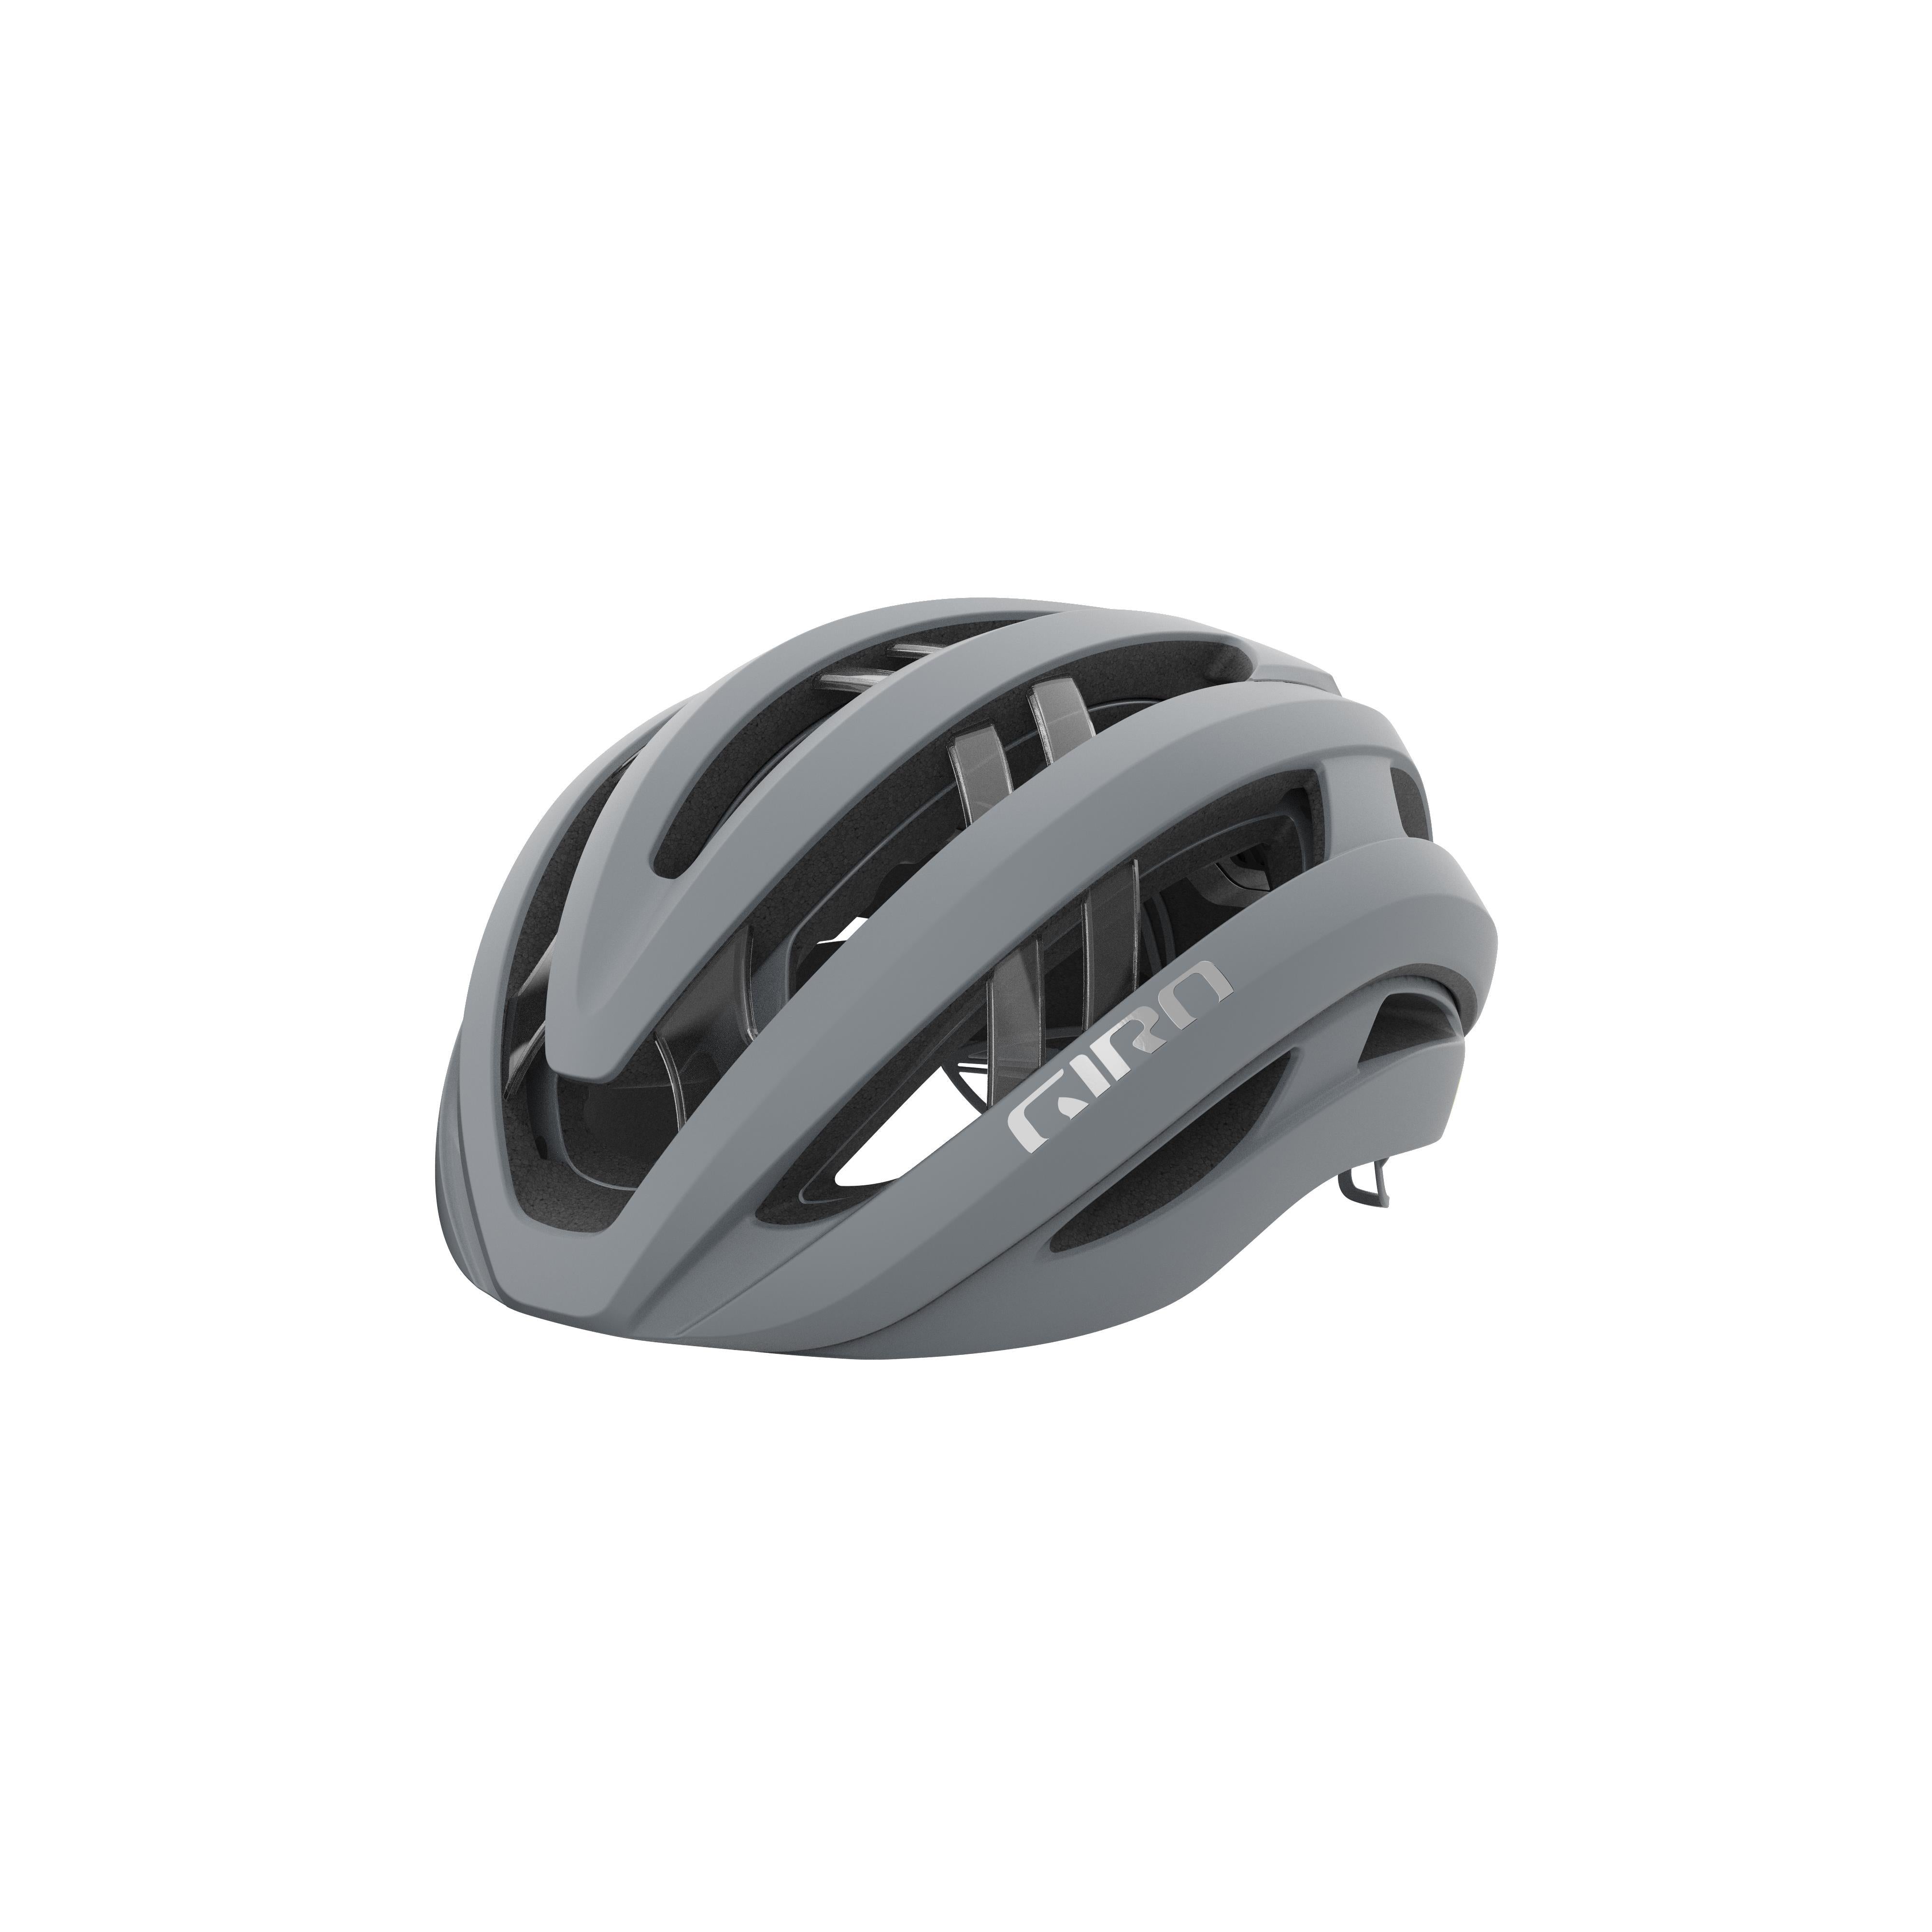 Aries Spherical Helmet – Giro Sport Design